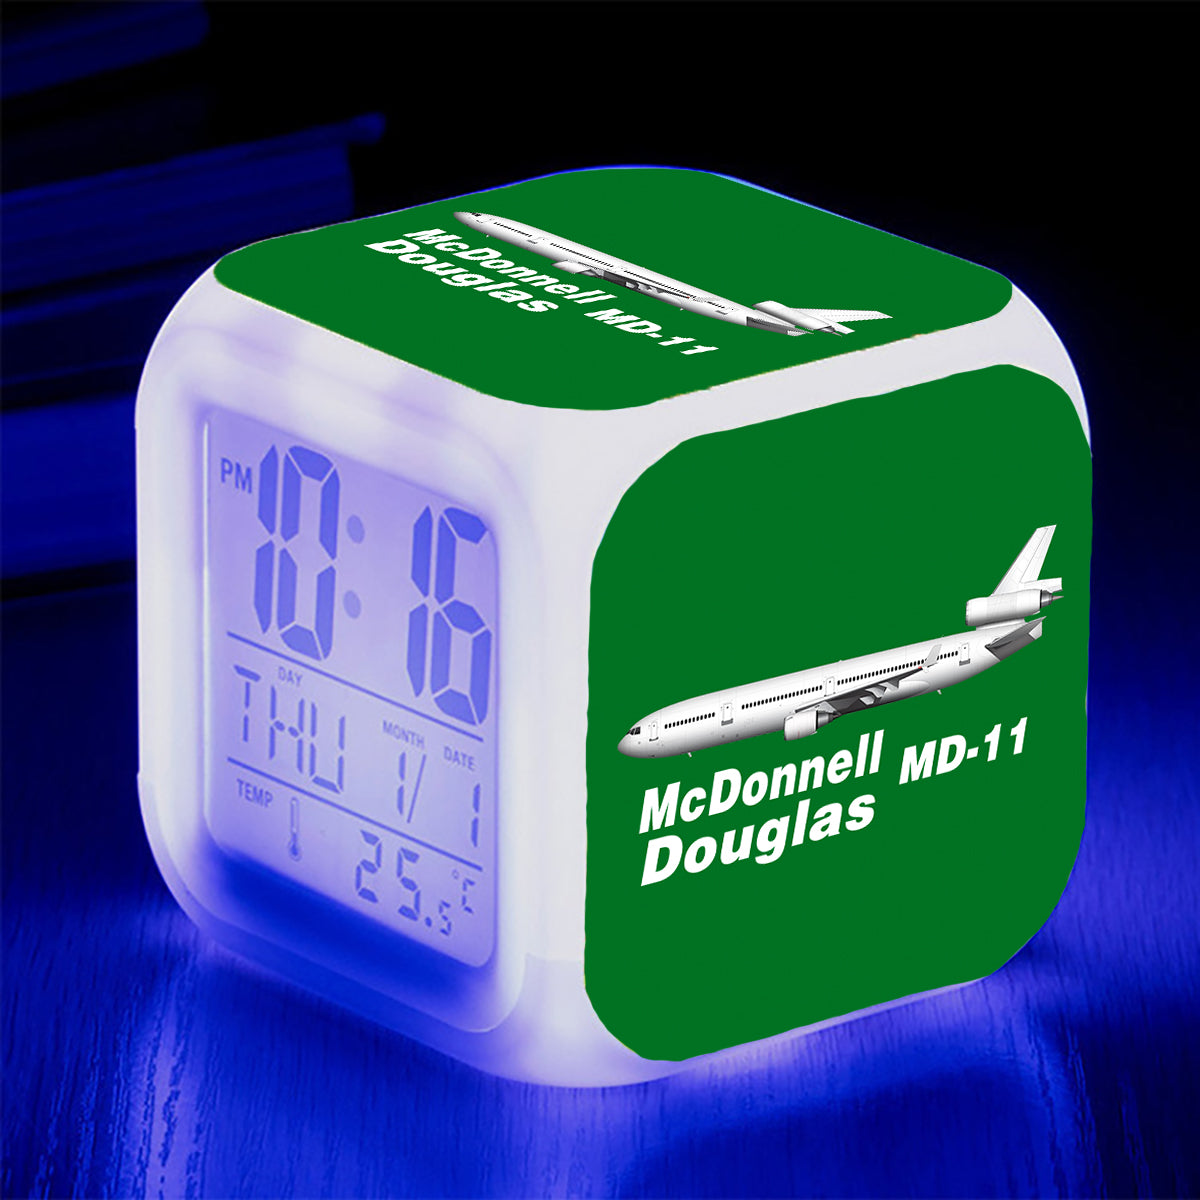 The McDonnell Douglas MD-11 Designed "7 Colour" Digital Alarm Clock